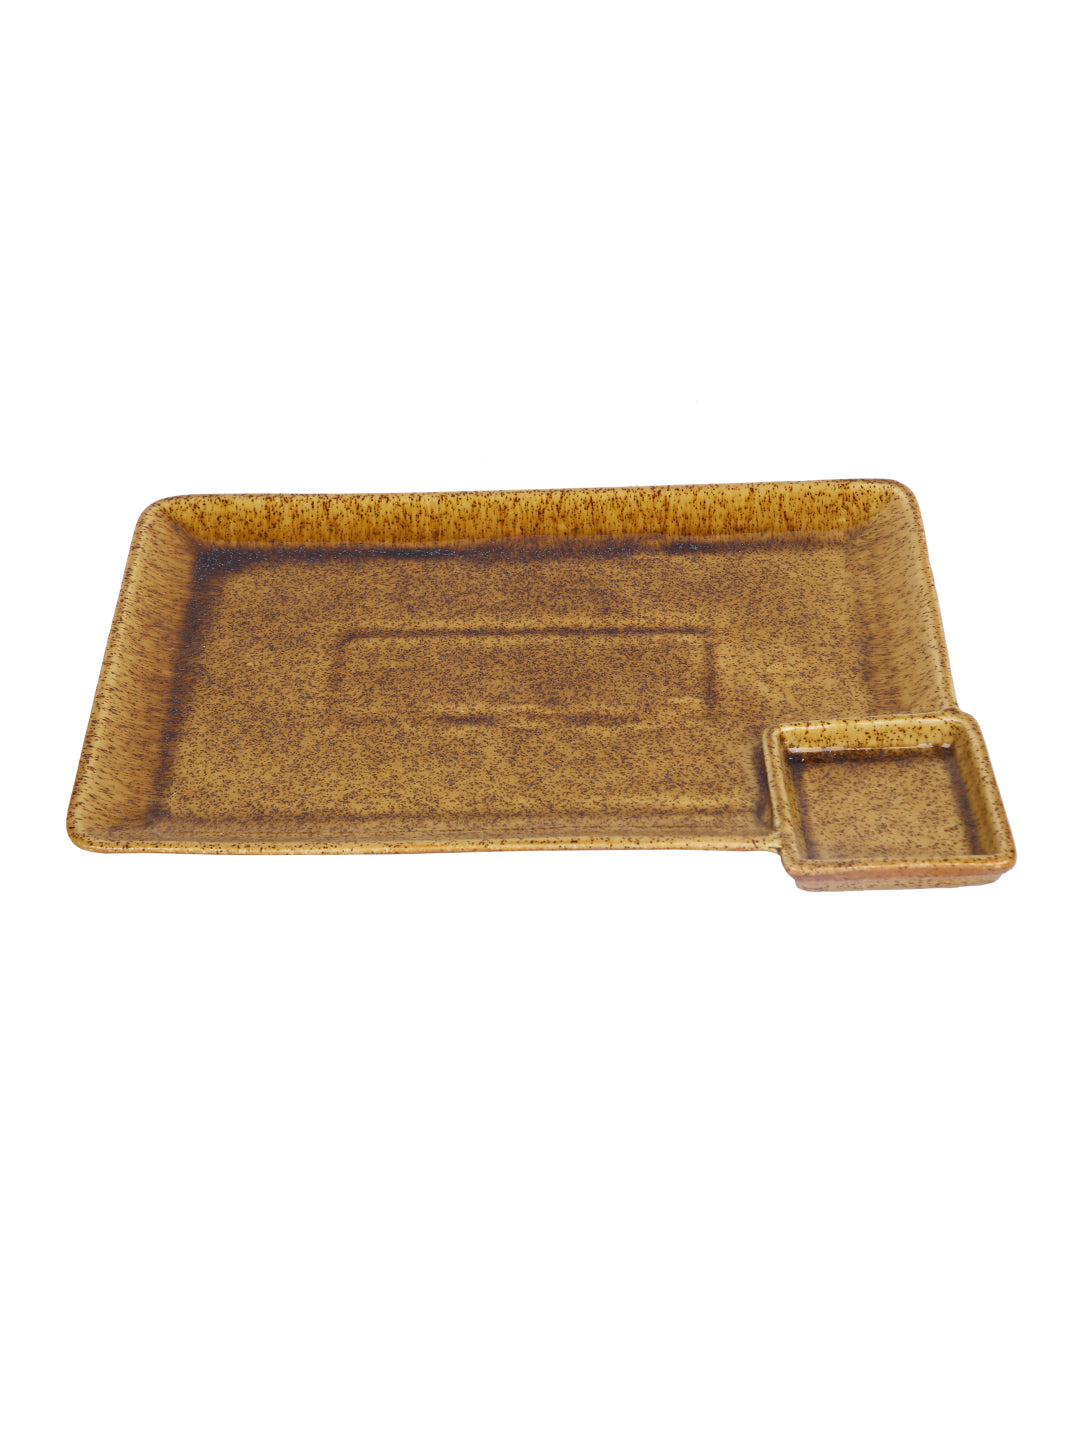 Glazed Ceramic Rectangular Platter in Natural Brown